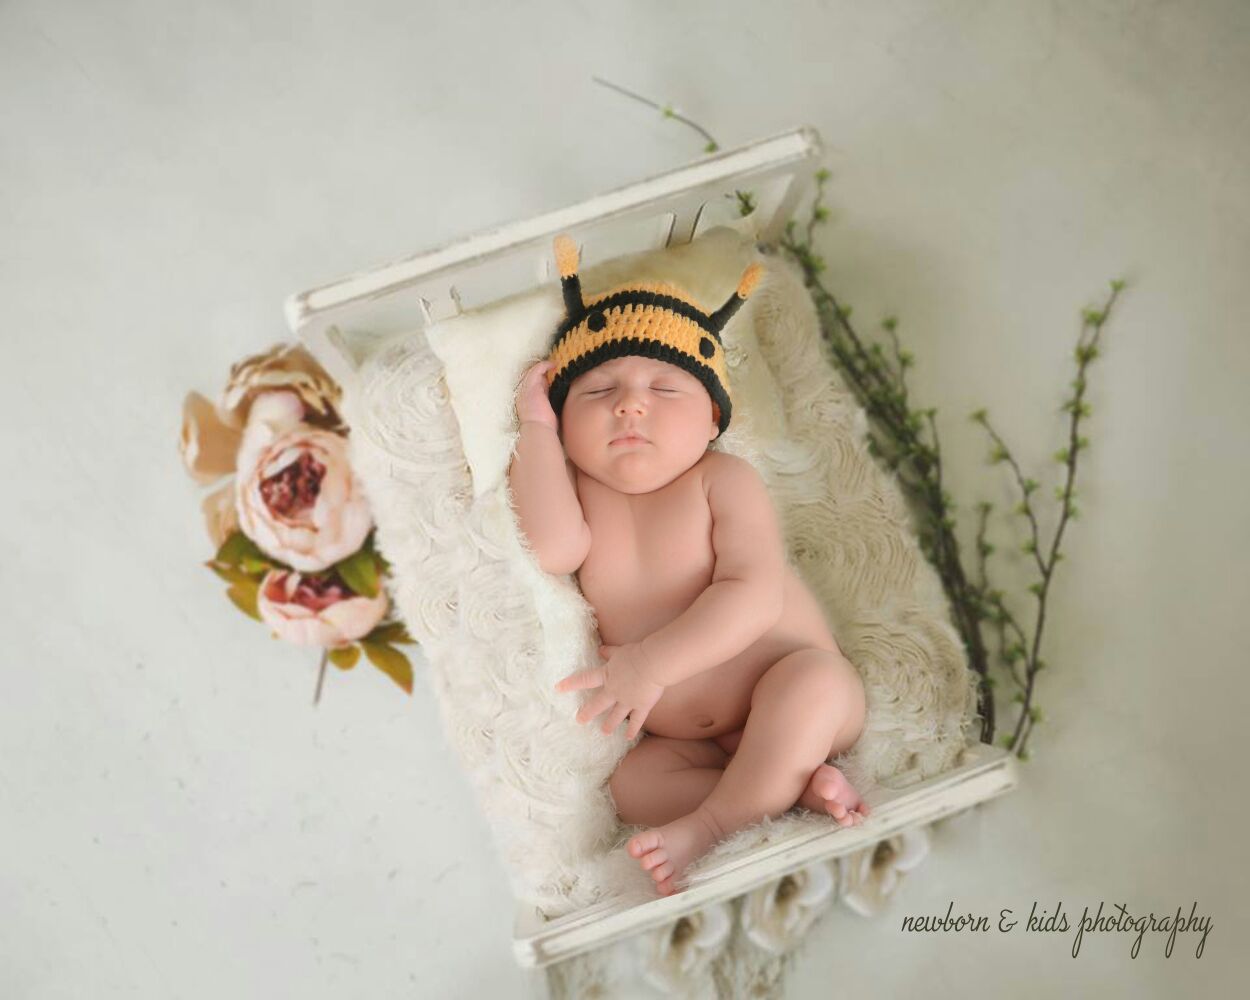 Newborn & kids photography